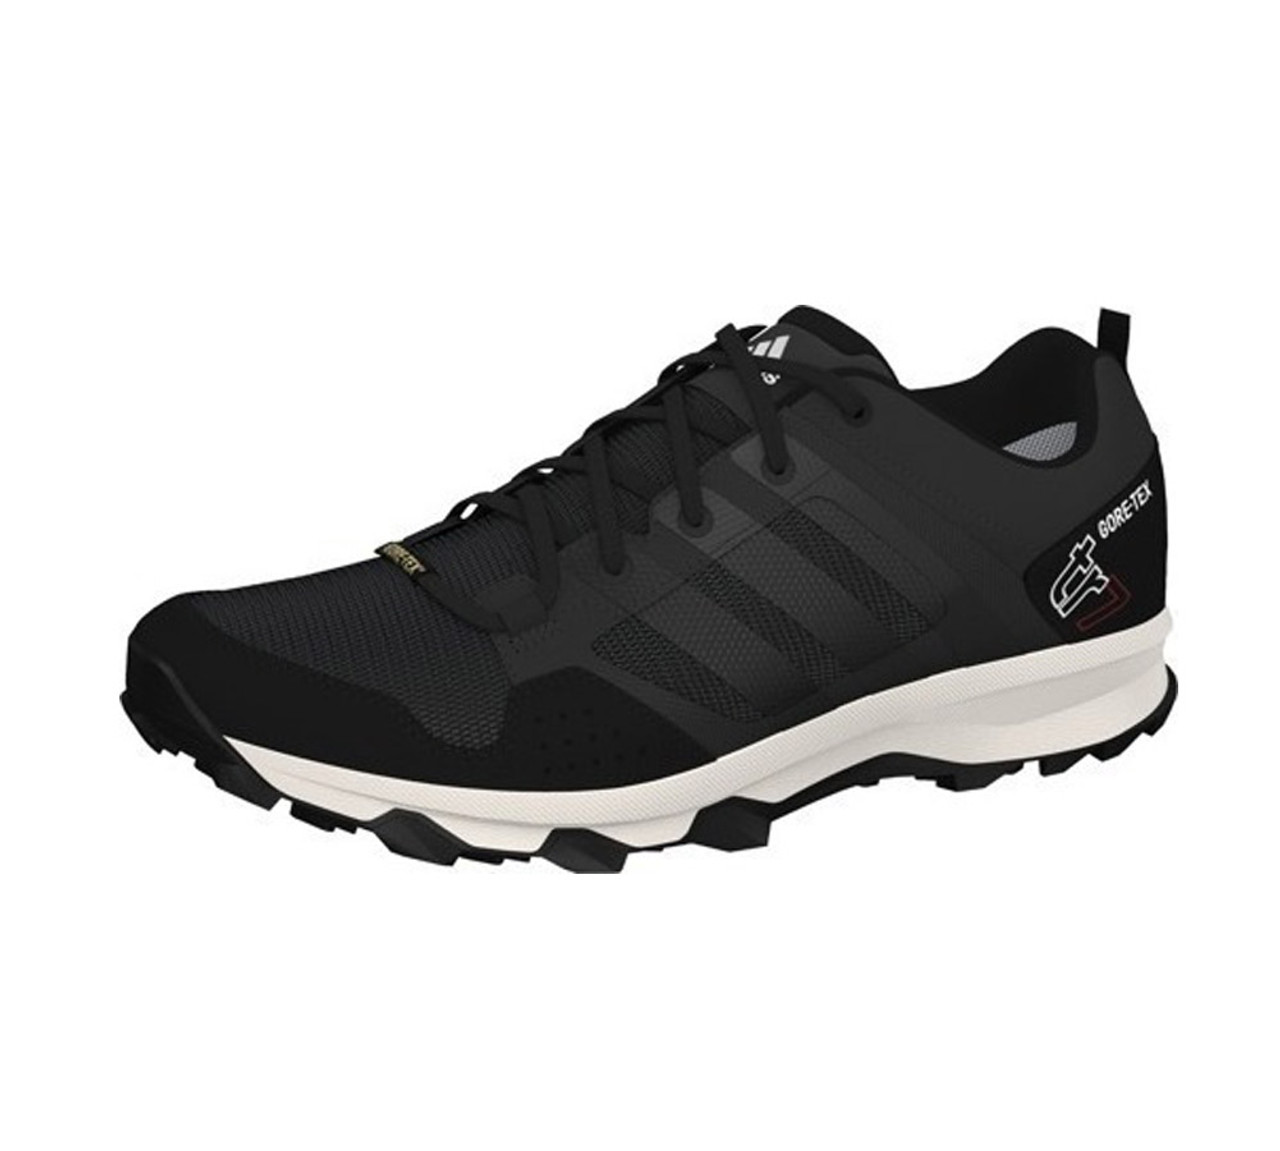 Adidas Men's Kanadia 7 TR GTX Trail Runner - Black | Discount Adidas Men's  Athletic Shoes & More - Shoolu.com | Shoolu.com